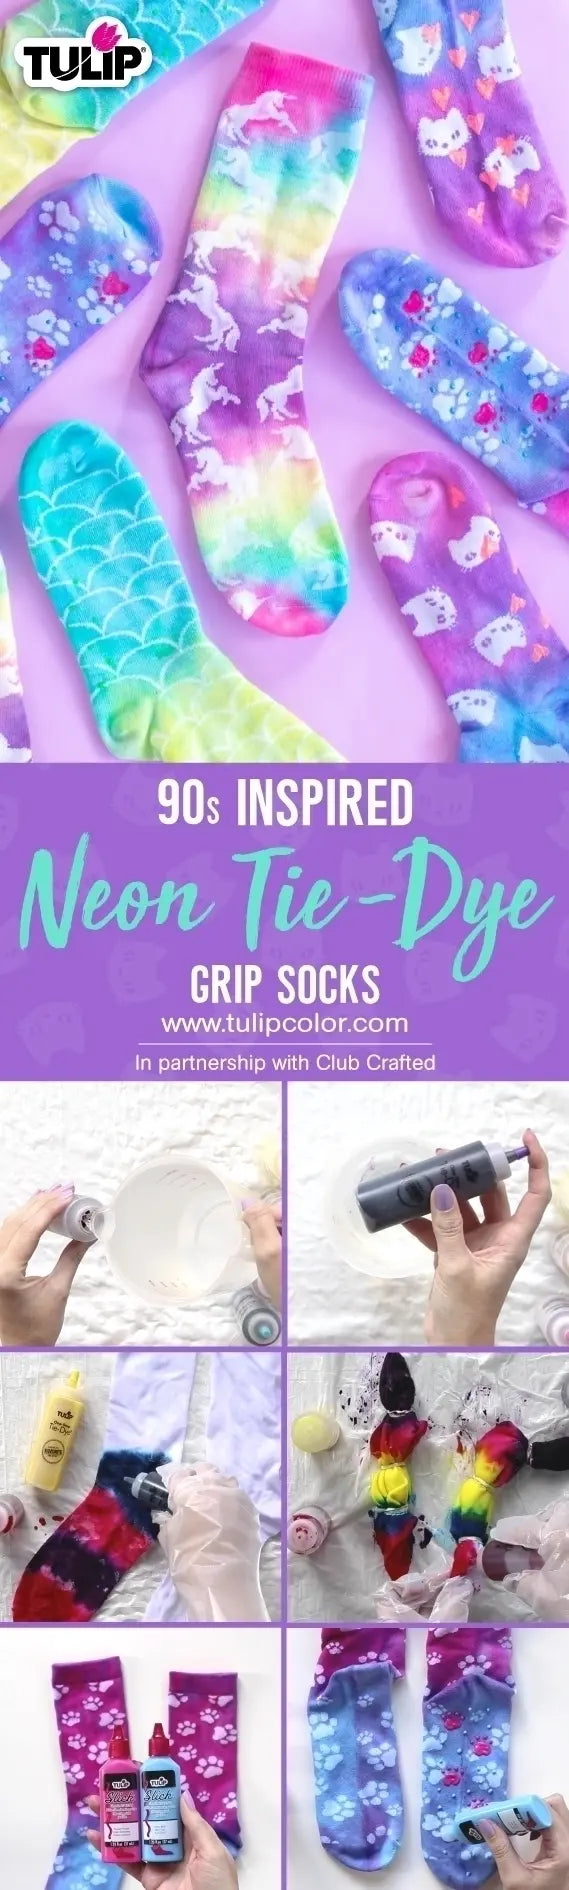 Tulip 90s Inspired Neon Tie-Dye Grip Socks